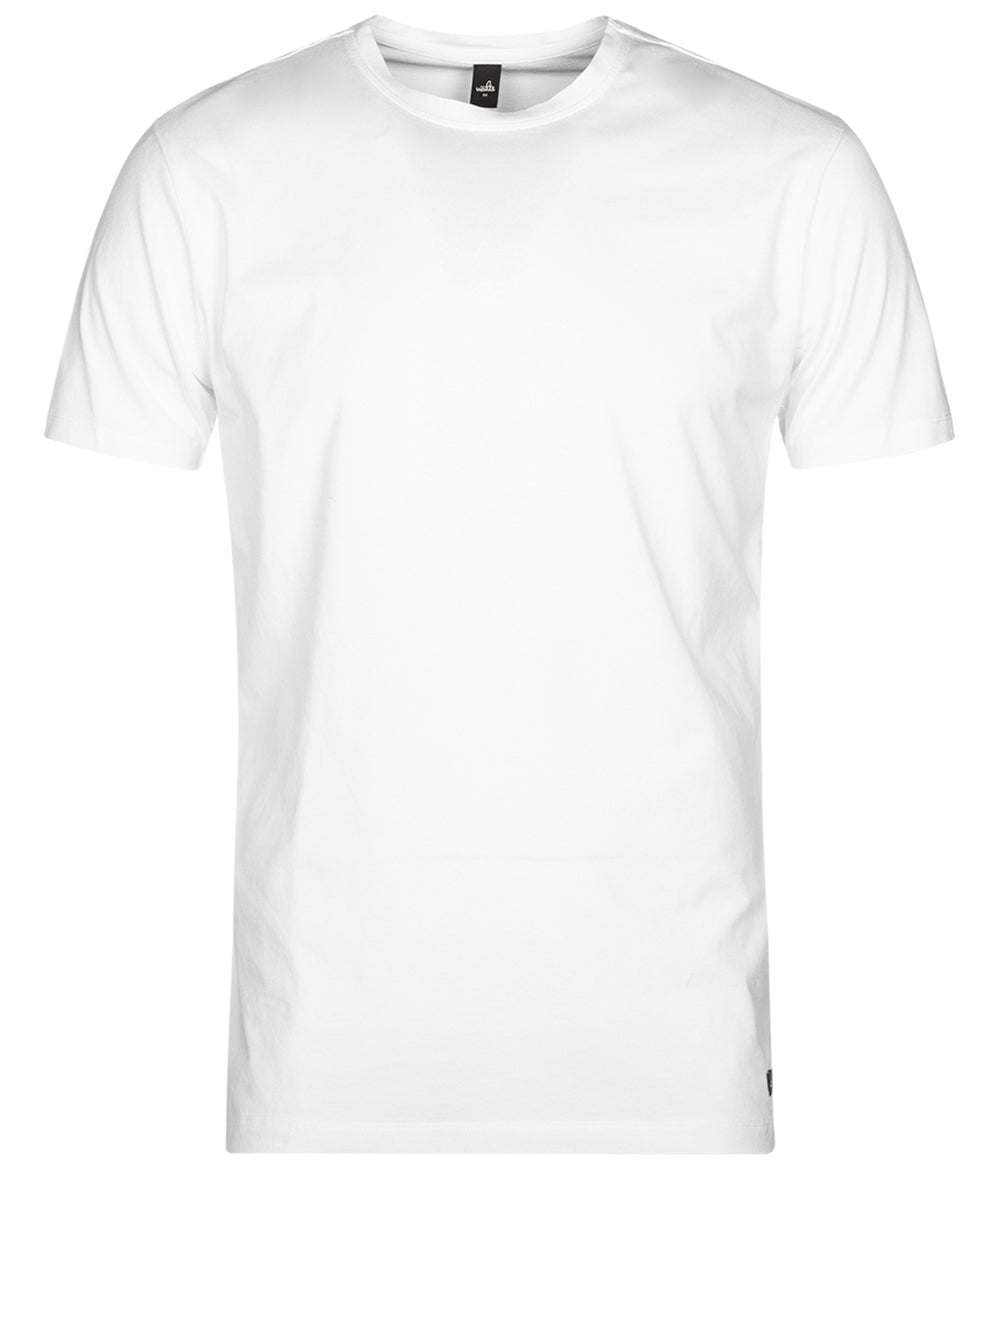 WAHTS White Crew Neck T-shirt